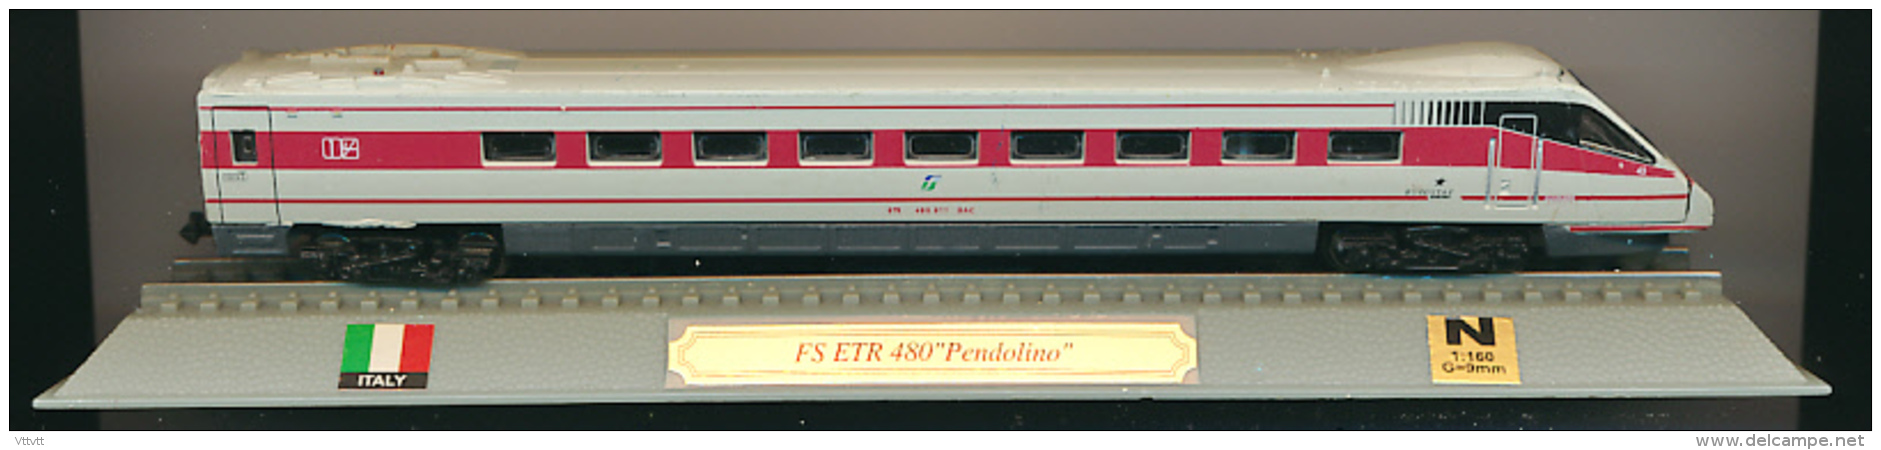 Locomotive : FS ETR 480 "Pendolino", Echelle N 1/160, G = 9 Mm, Italy, Italie - Loks